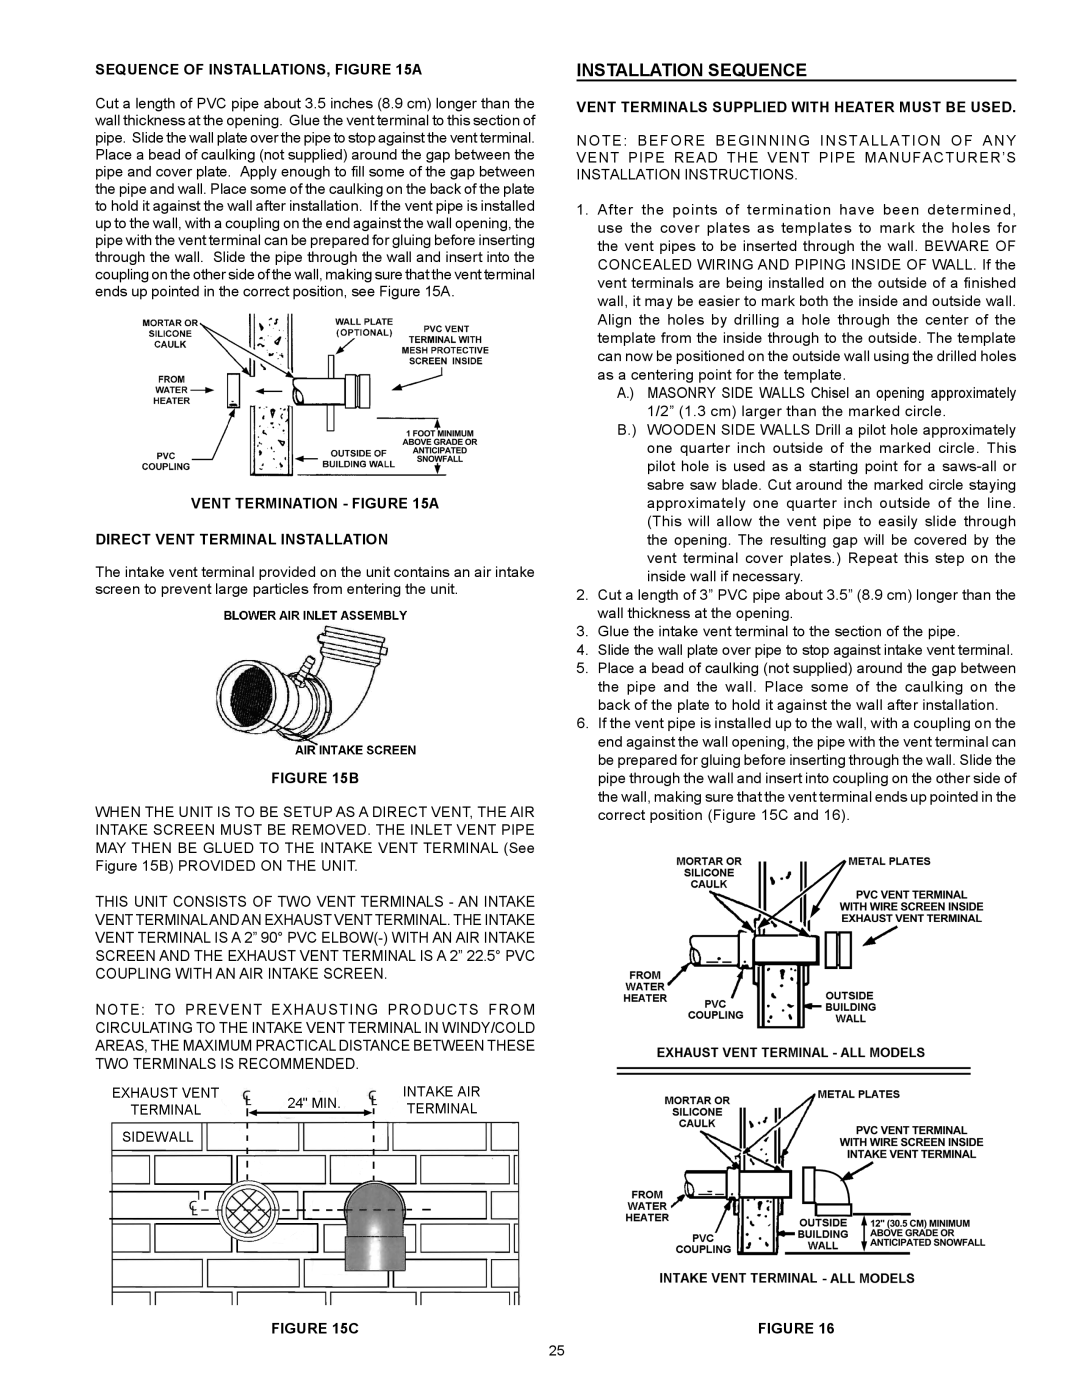 American Water Heater VG6250T100 instruction manual Installation Sequence, Sequence Of Installations, A, B, C 